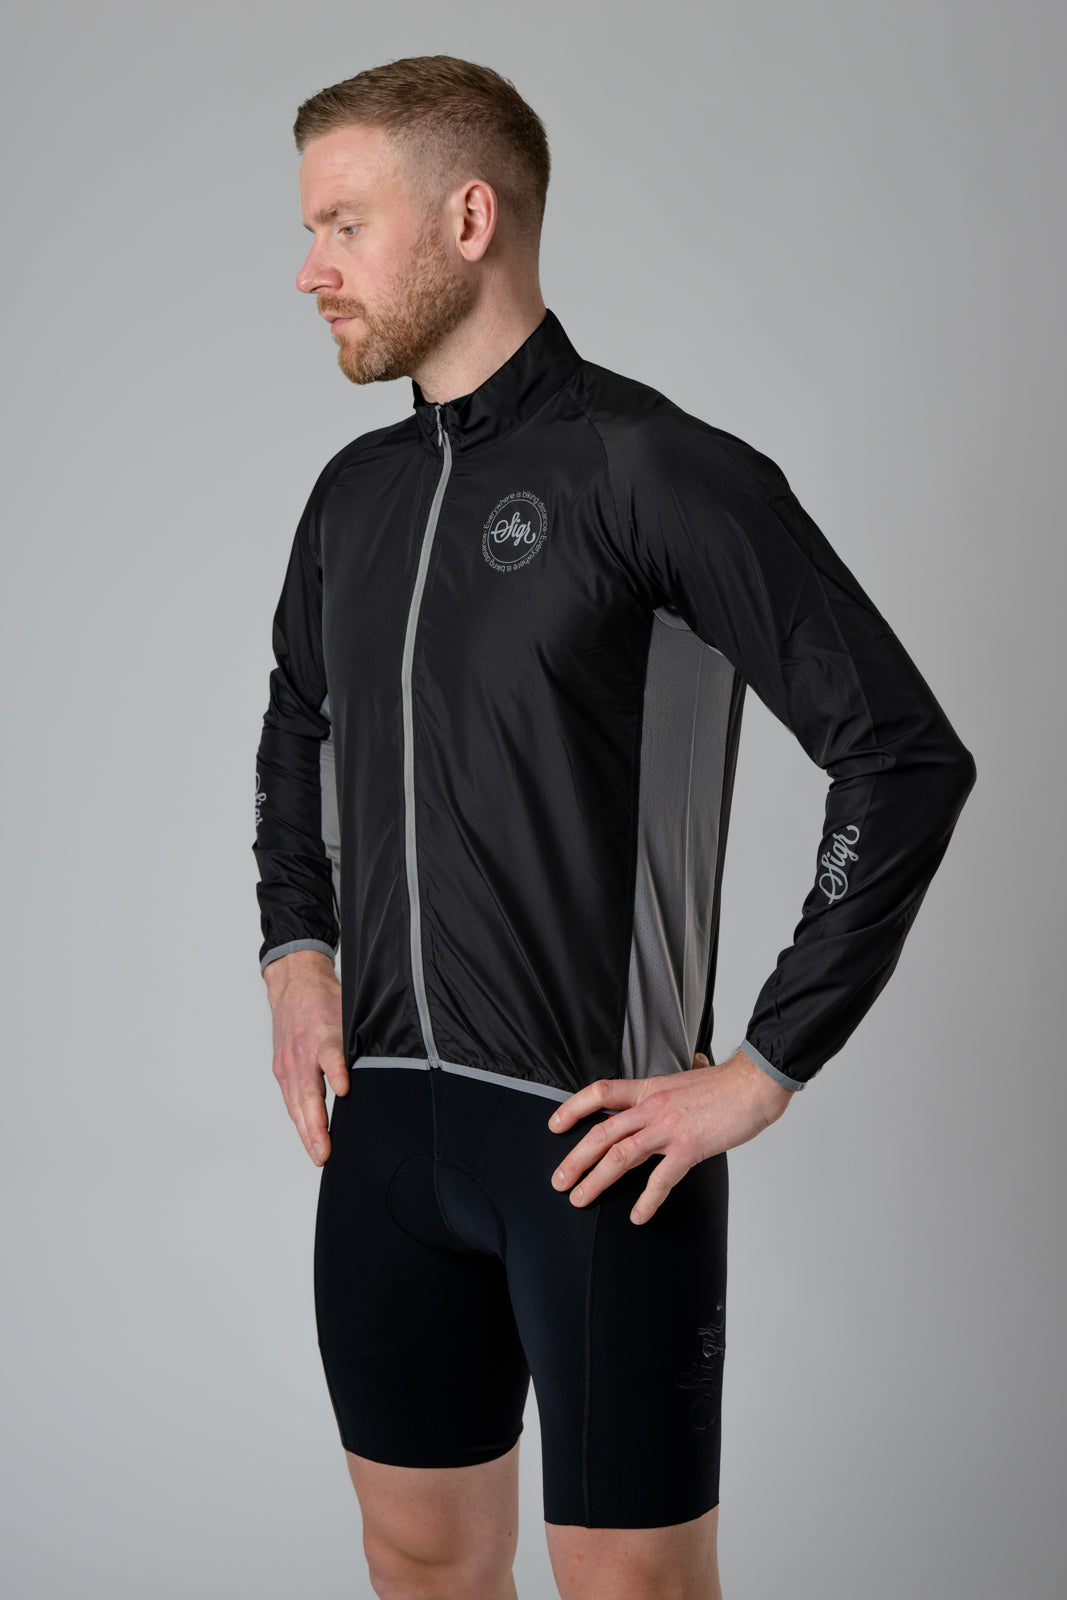 Uppsala Black - Road Cycling Wind Jacket for Men